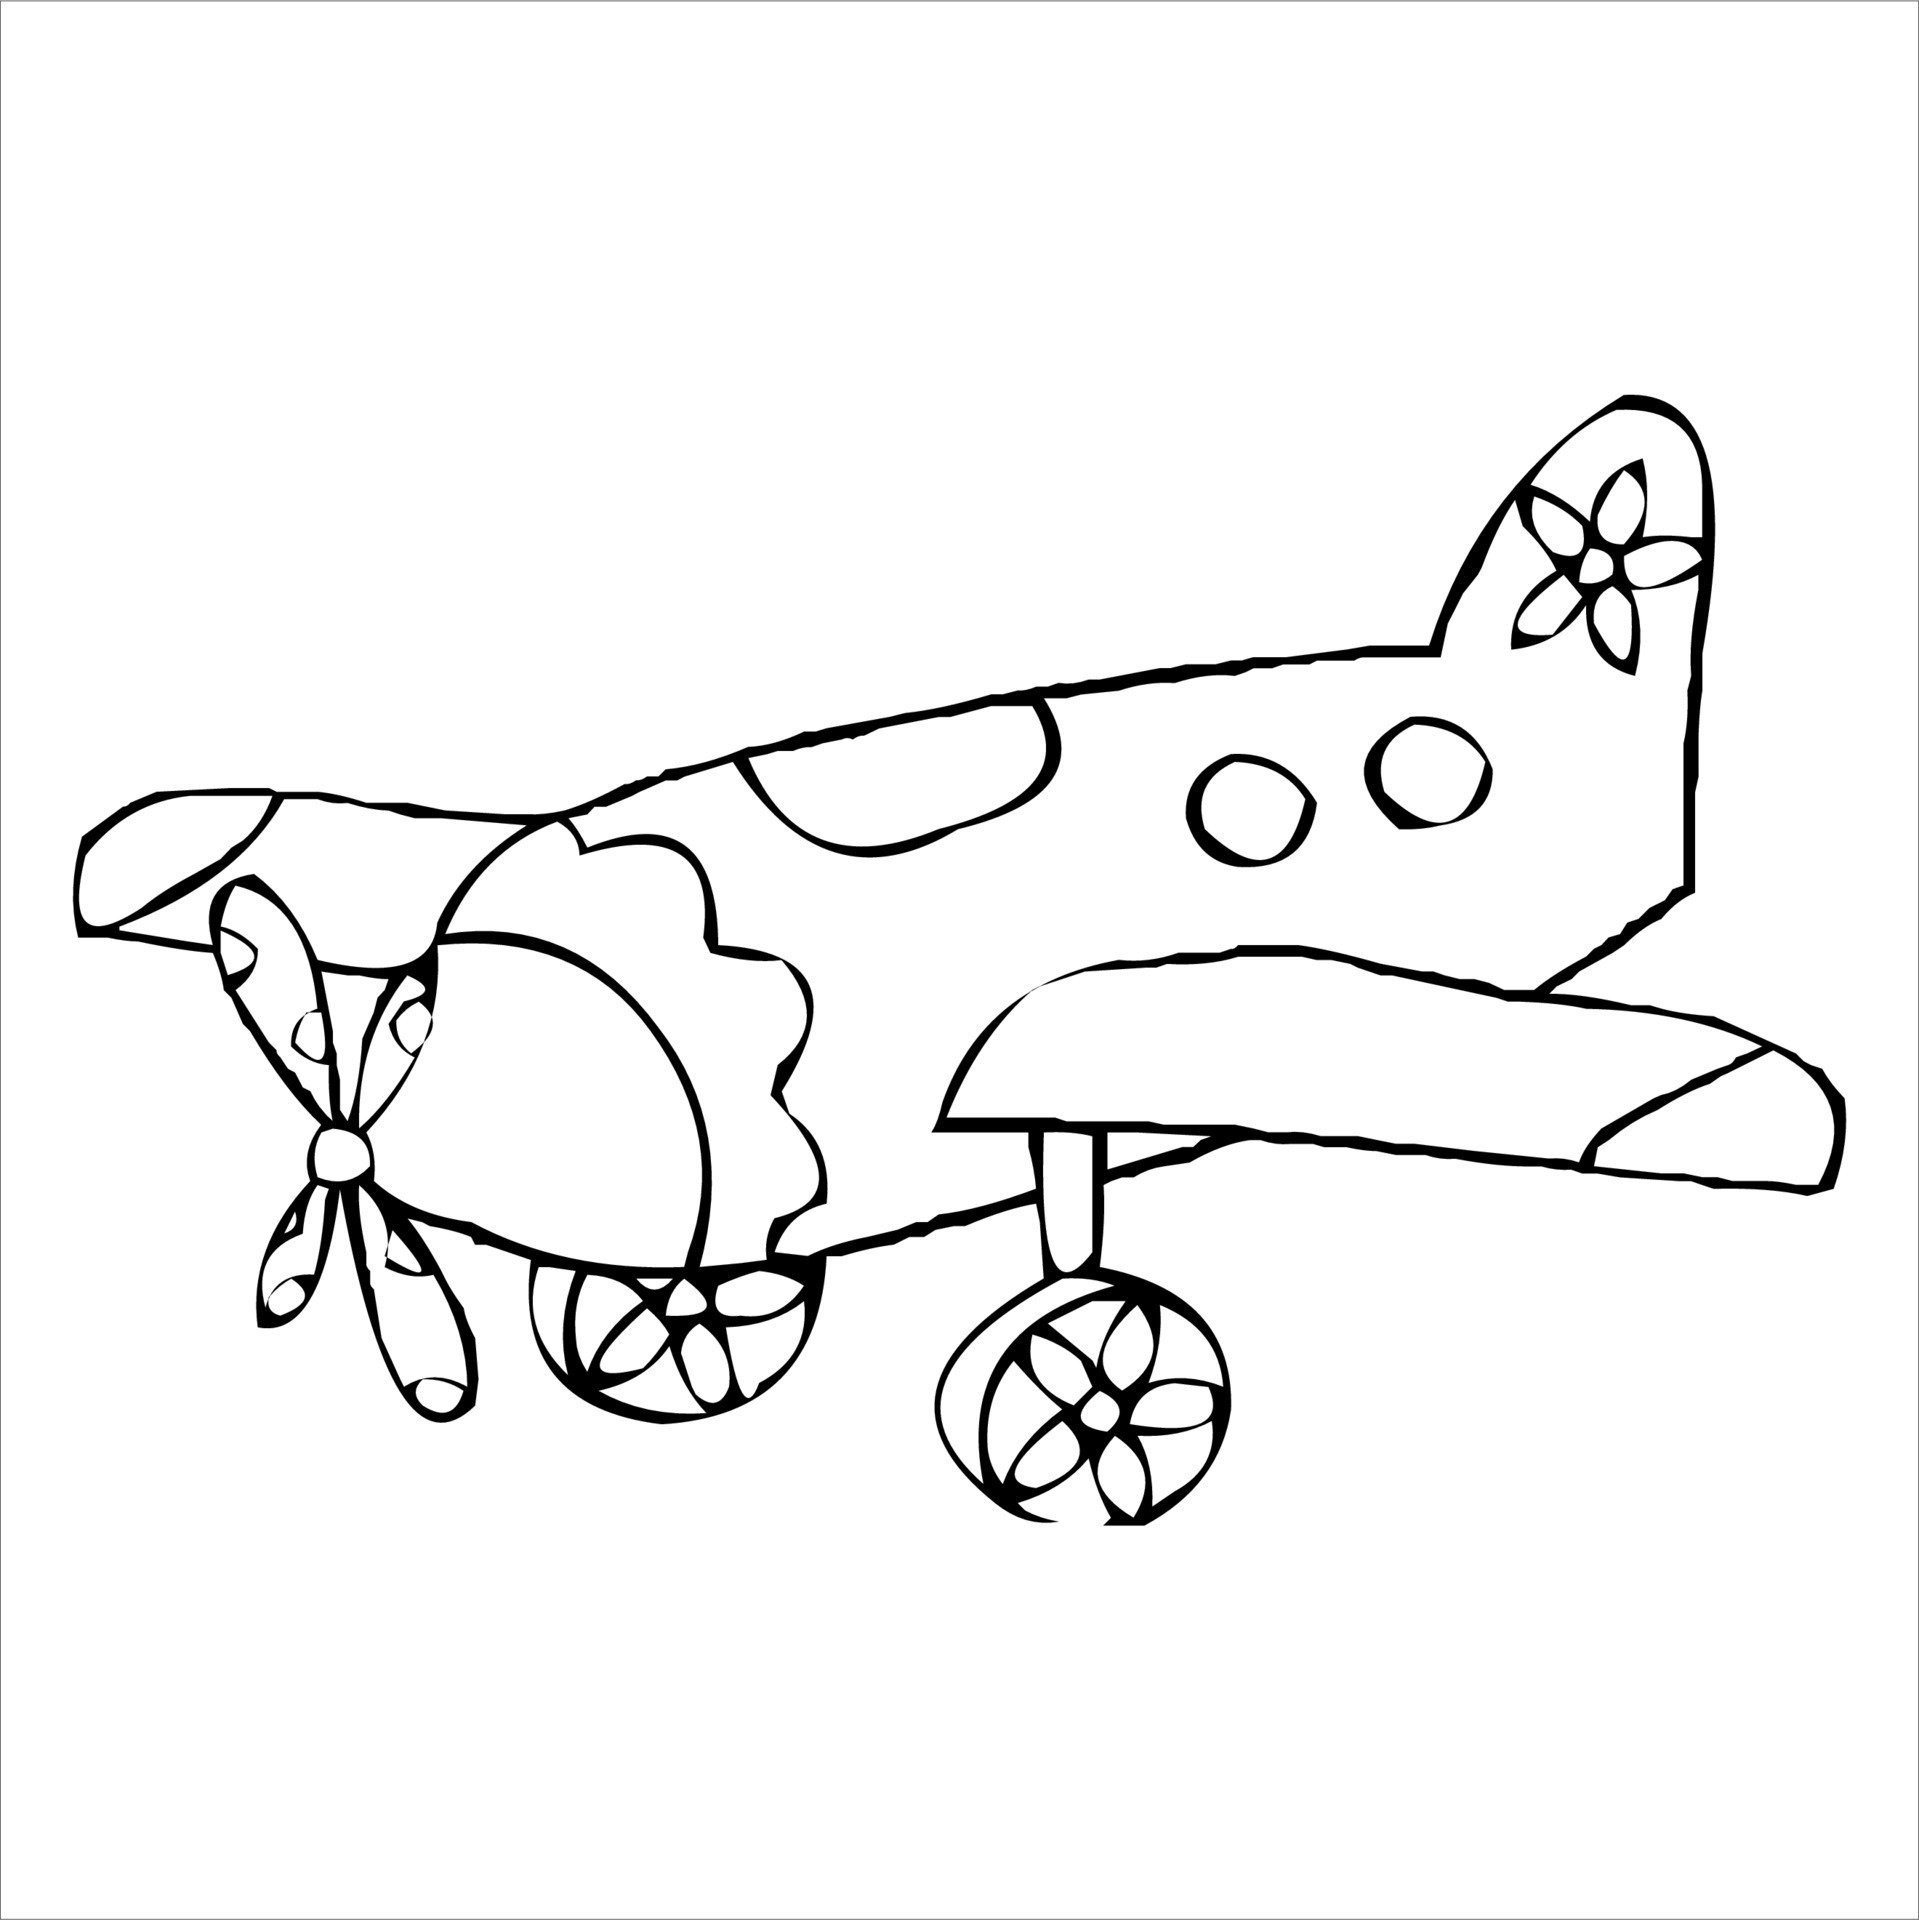 easy drawings for children